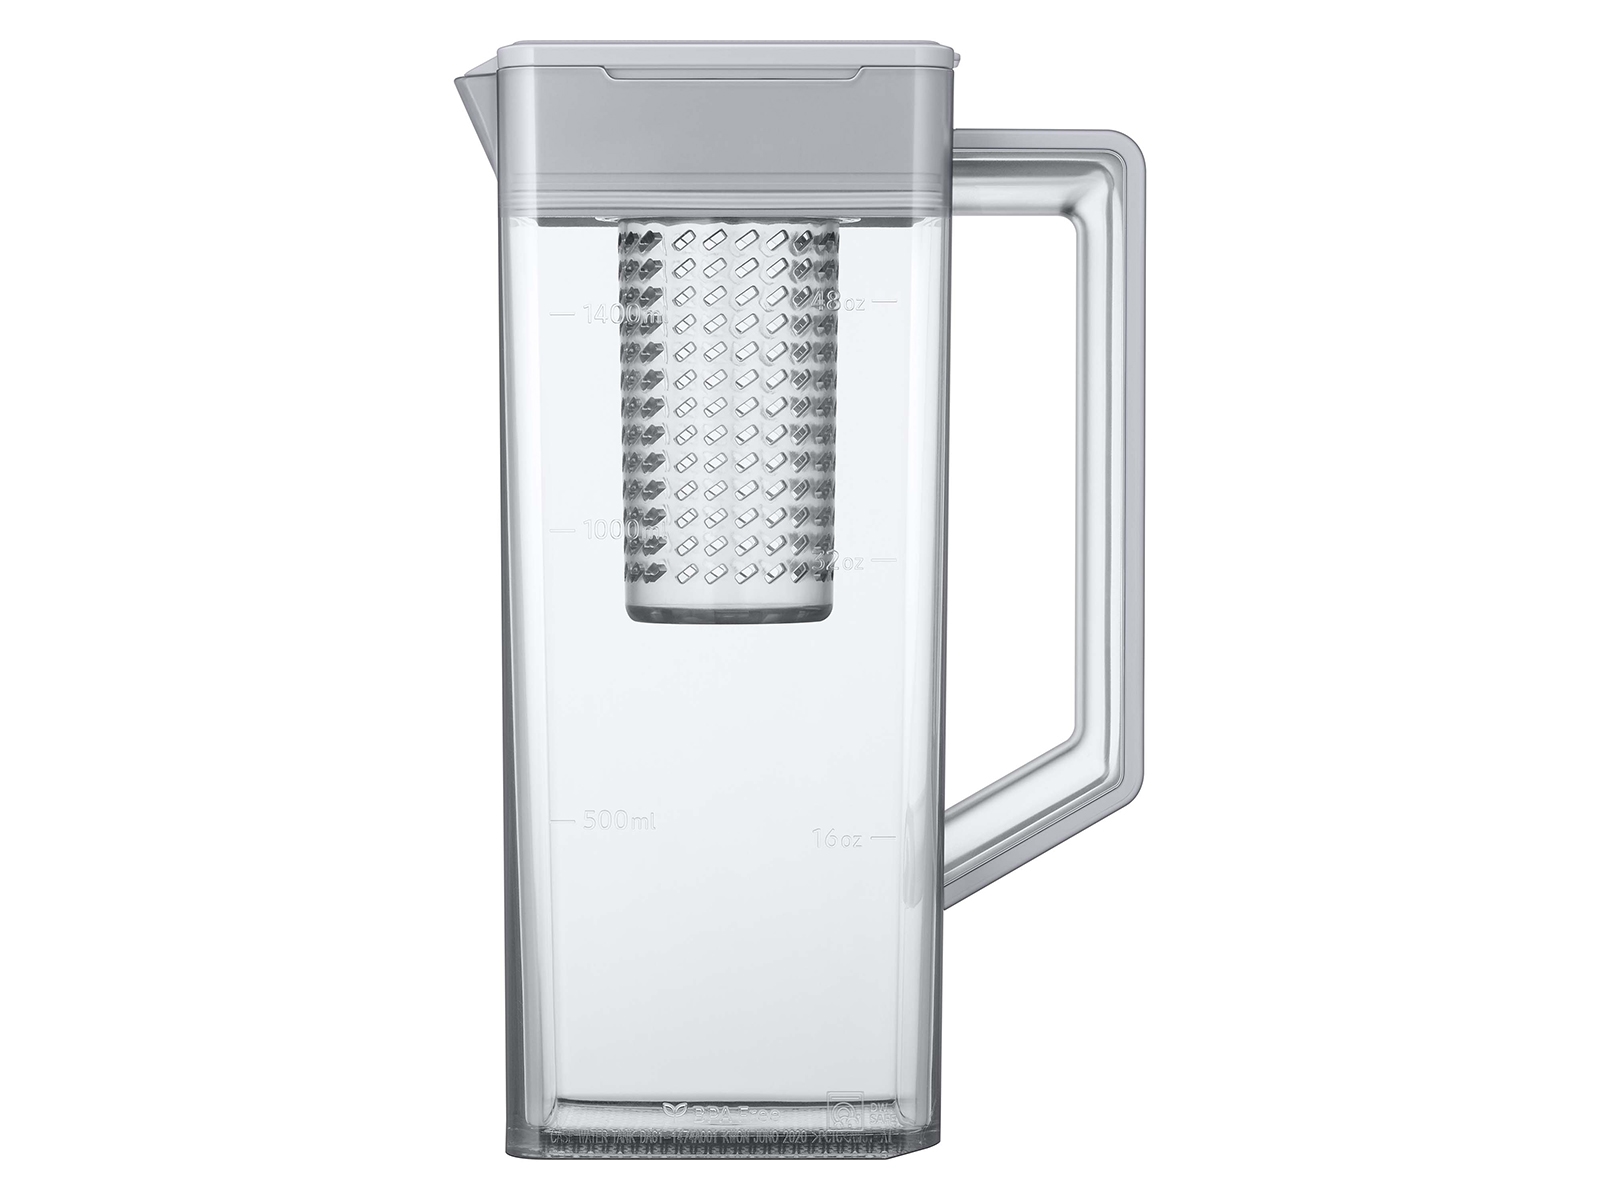 Samsung - Bespoke 23 Cu. ft Counter Depth 4-Door French Door Refrigerator with Autofill Water Pitcher - White Glass